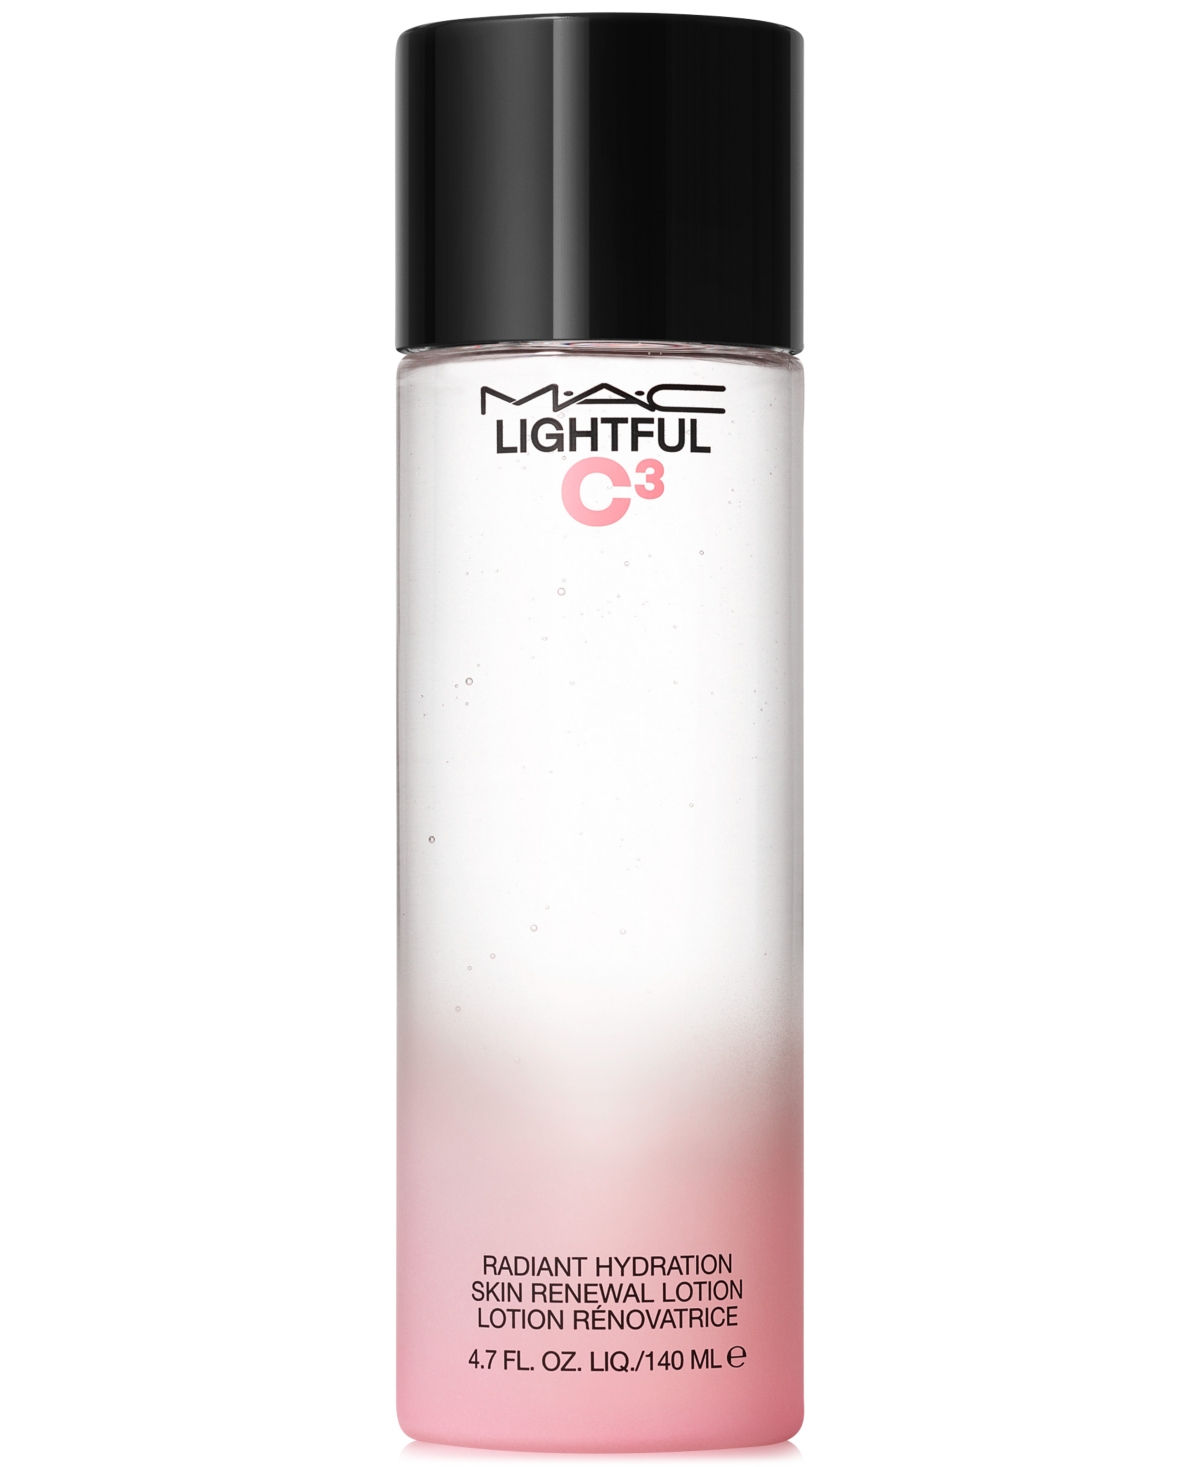 Mac Lightful C³ Radiant Hydration Skin Renewal Lotion In No Color